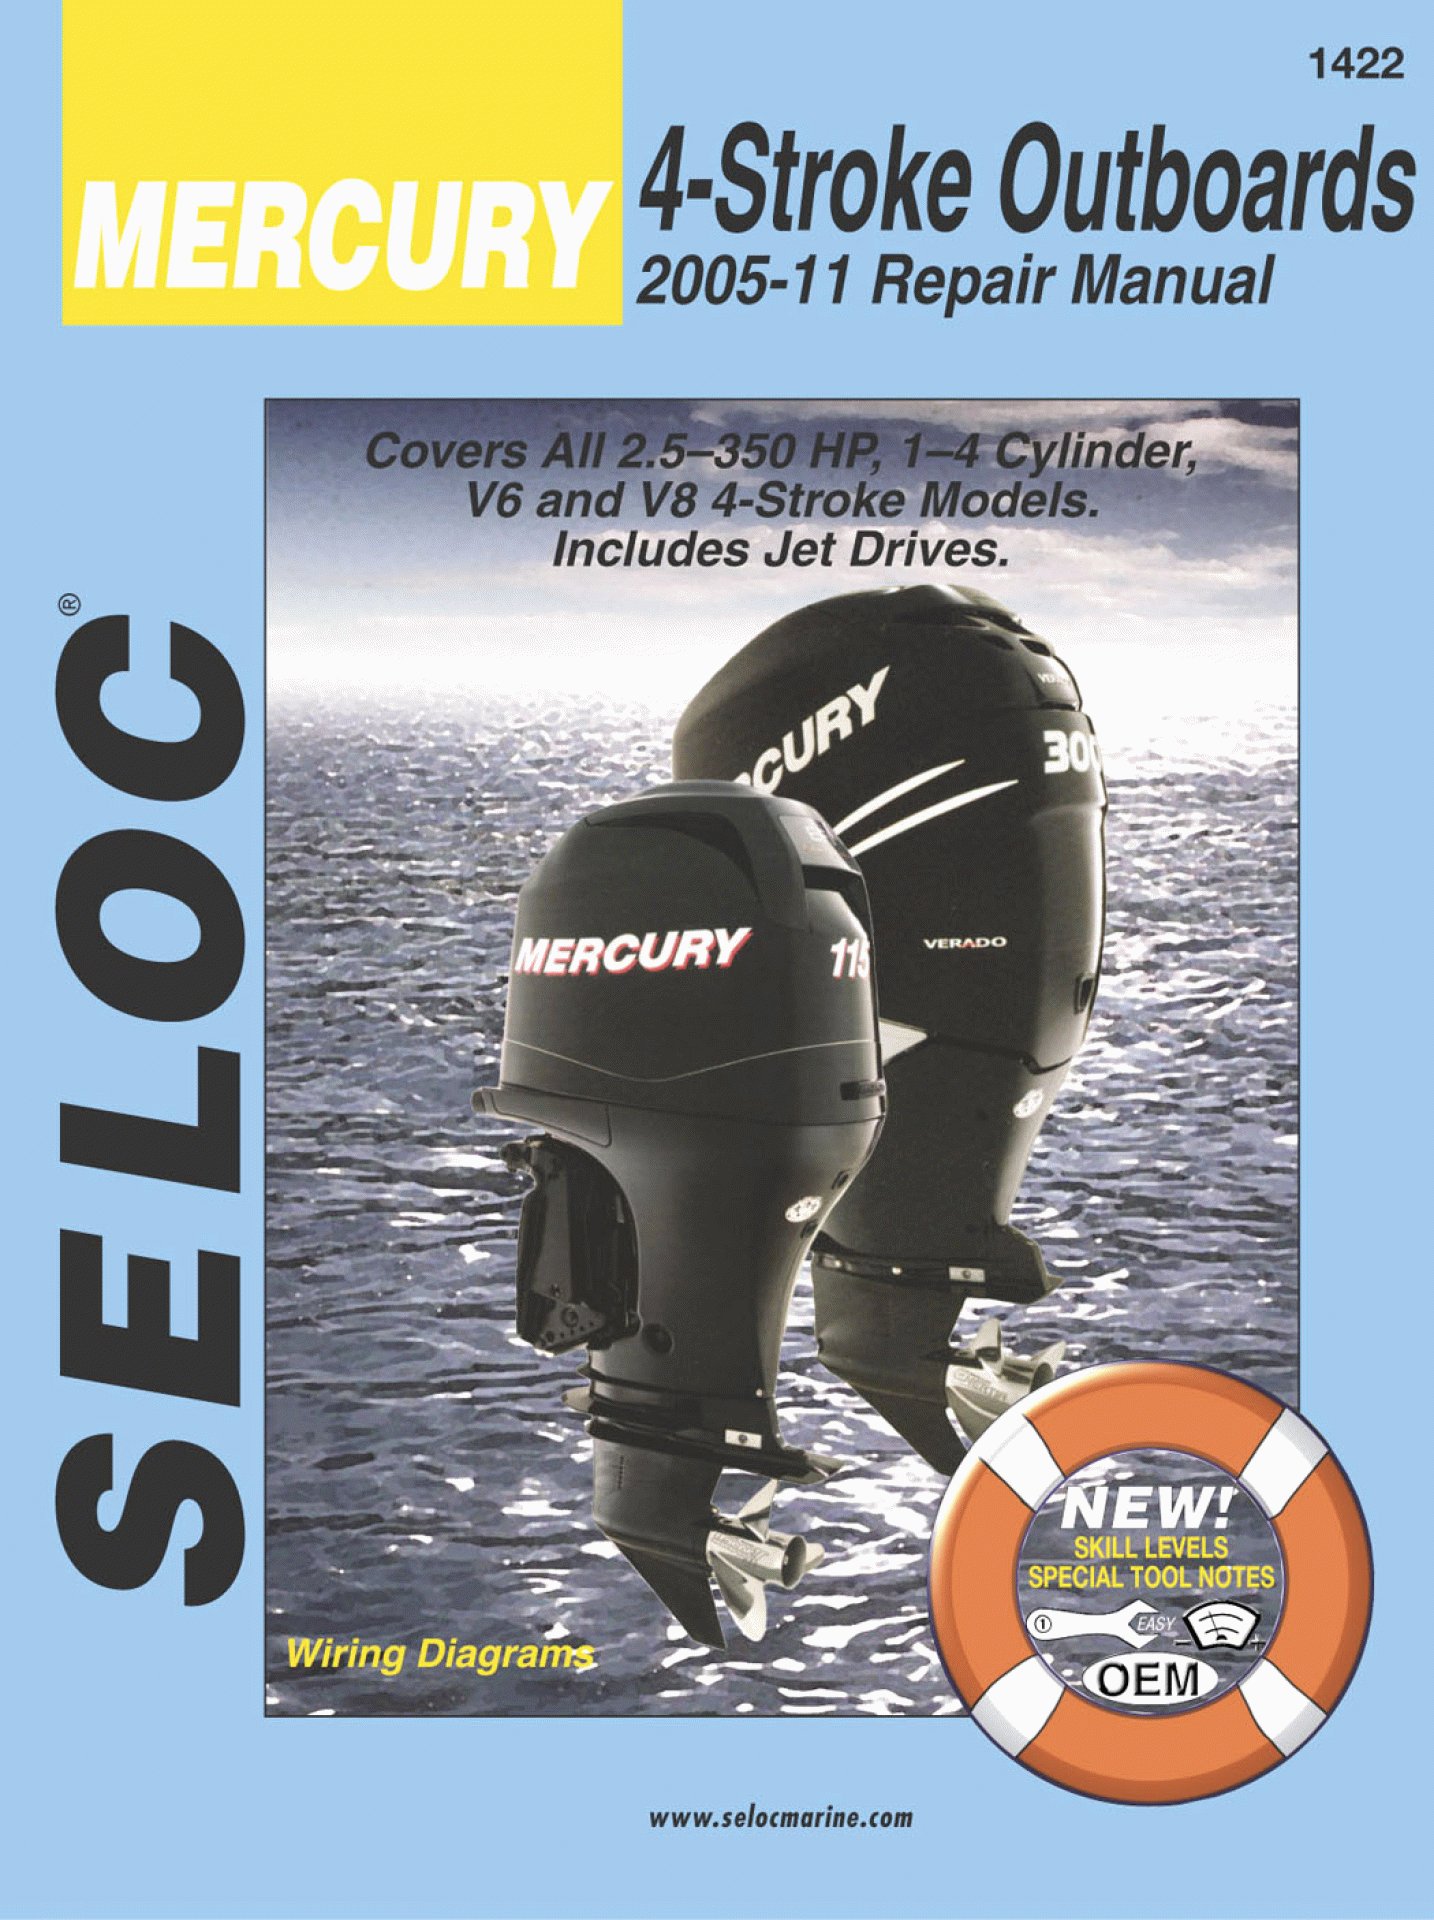 SELOC PUBLISHING | 18-01422 | REPAIR MANUAL Mercury & Mariner All 4-Stroke Engines 2005-11